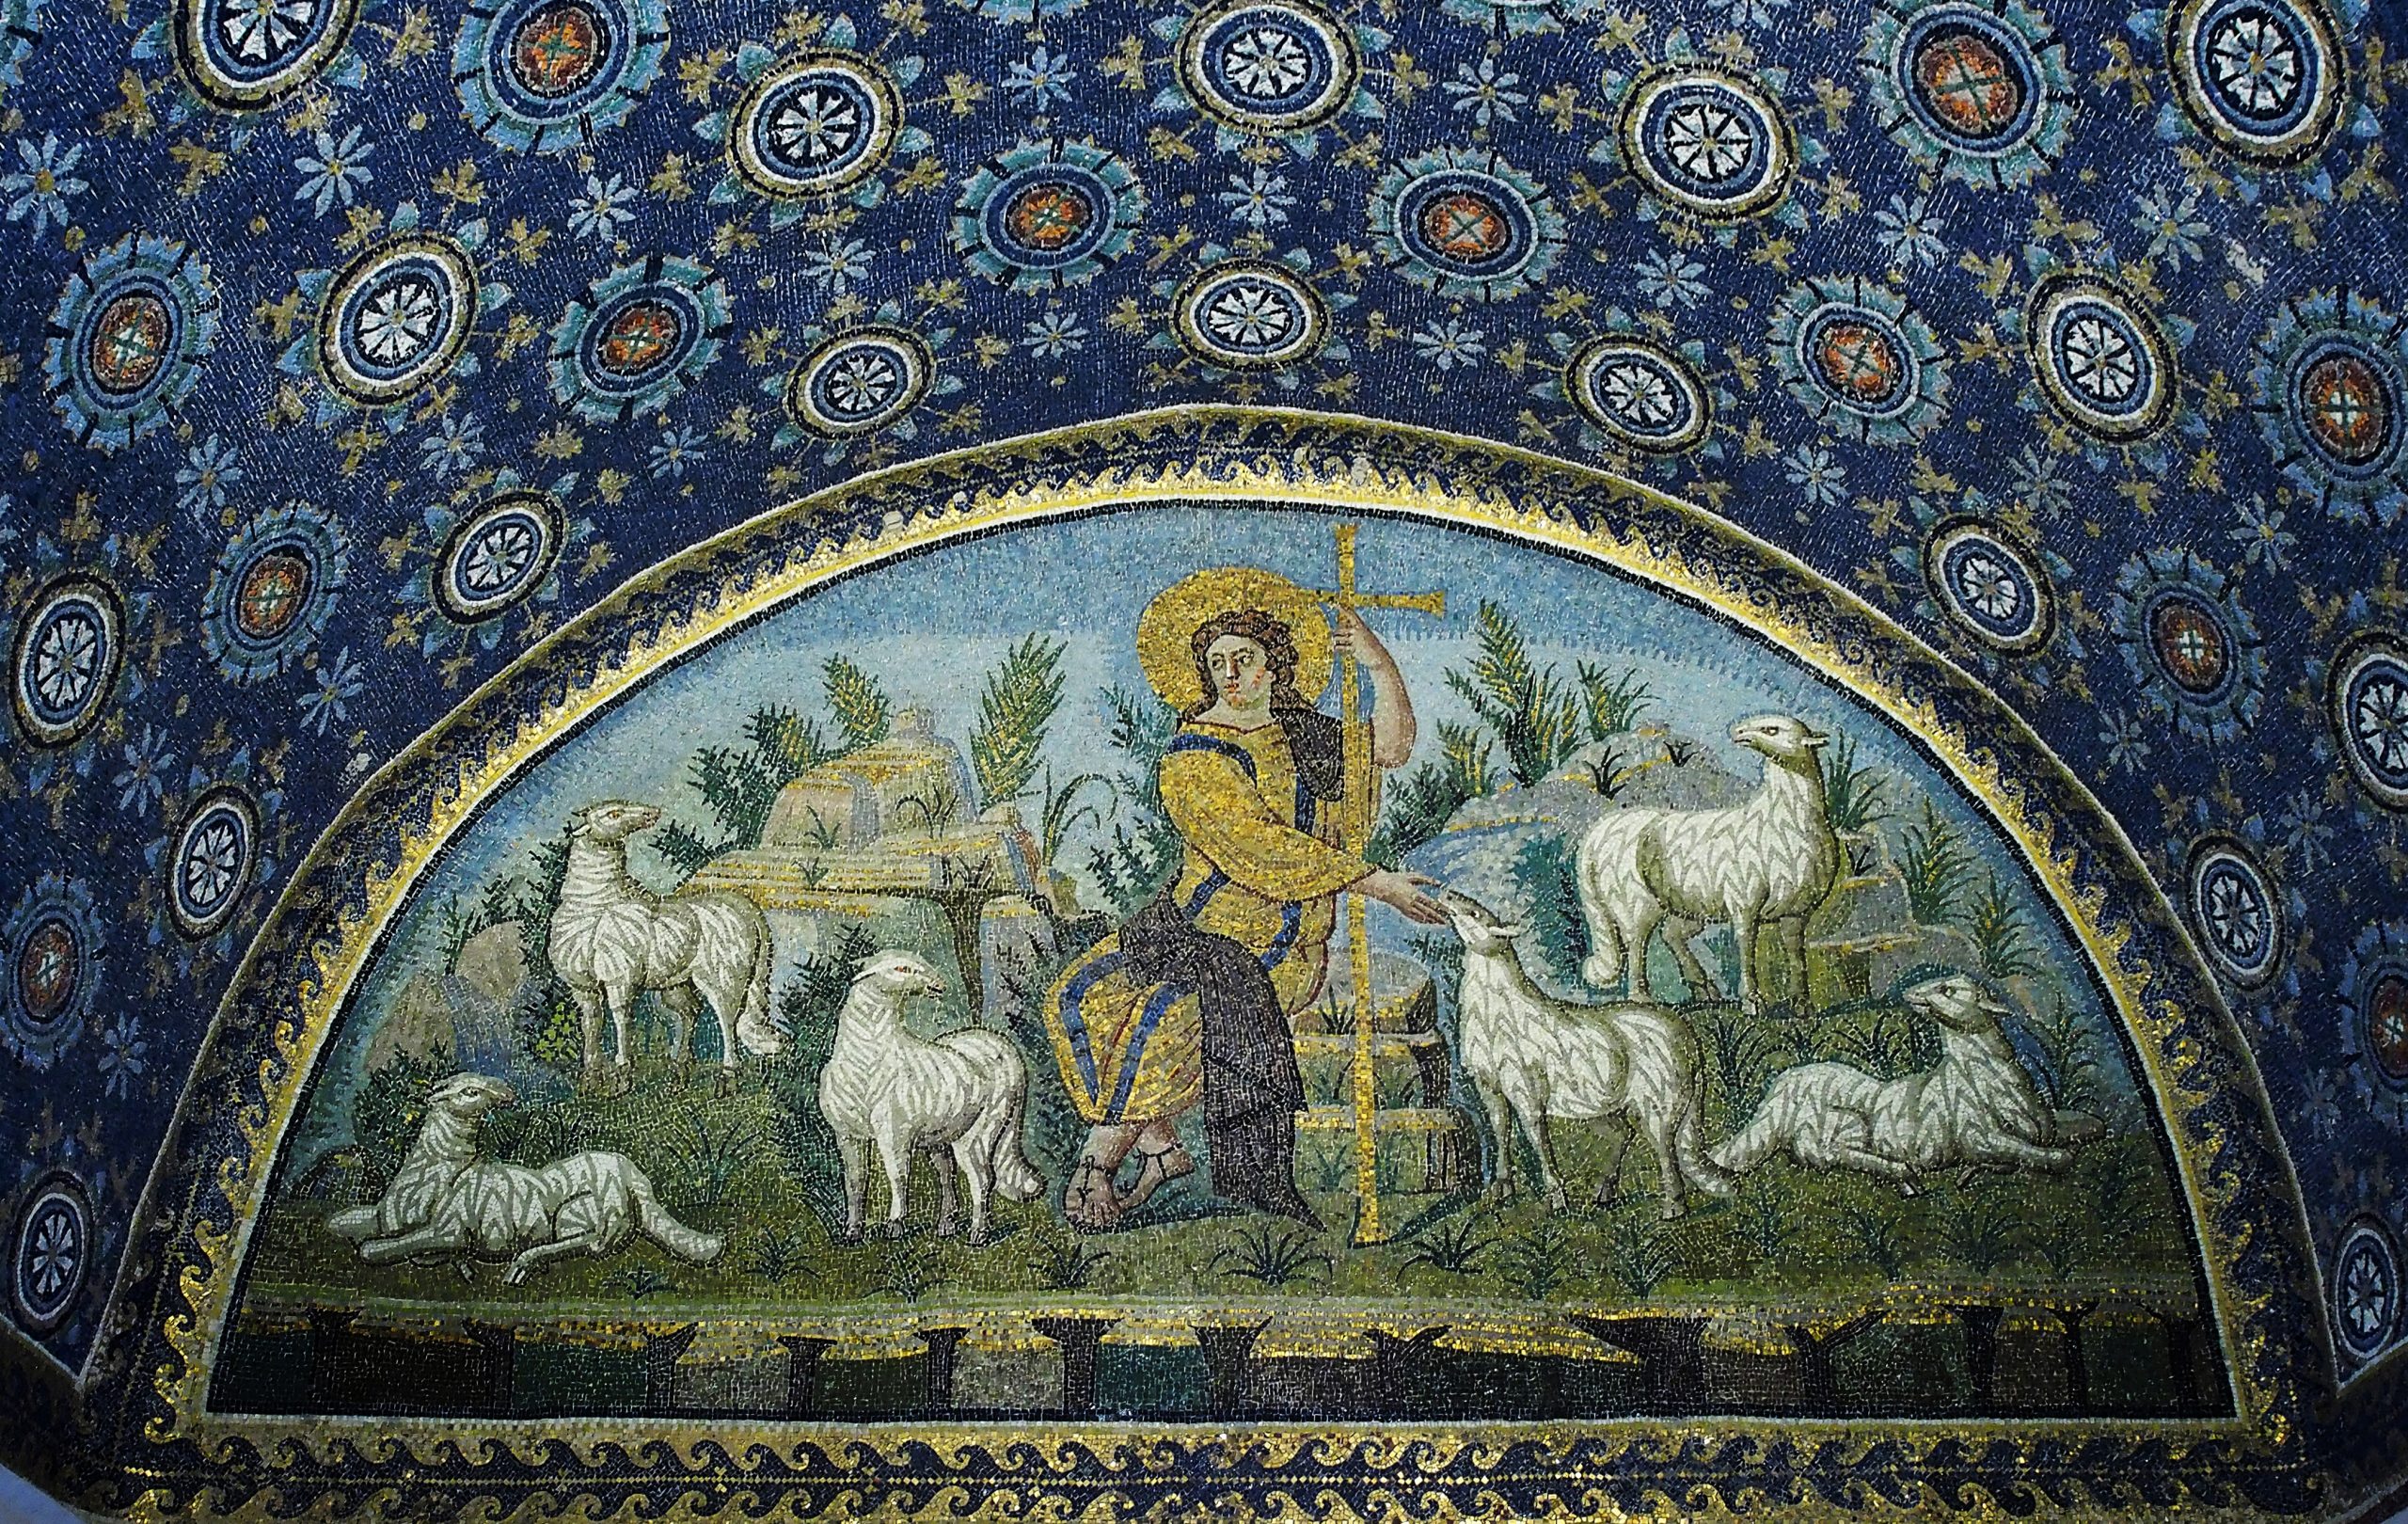 The Good Shepherd, Mosaic in the Mausoleum of Galla Placidia, Ravenna, Italy, c. 425